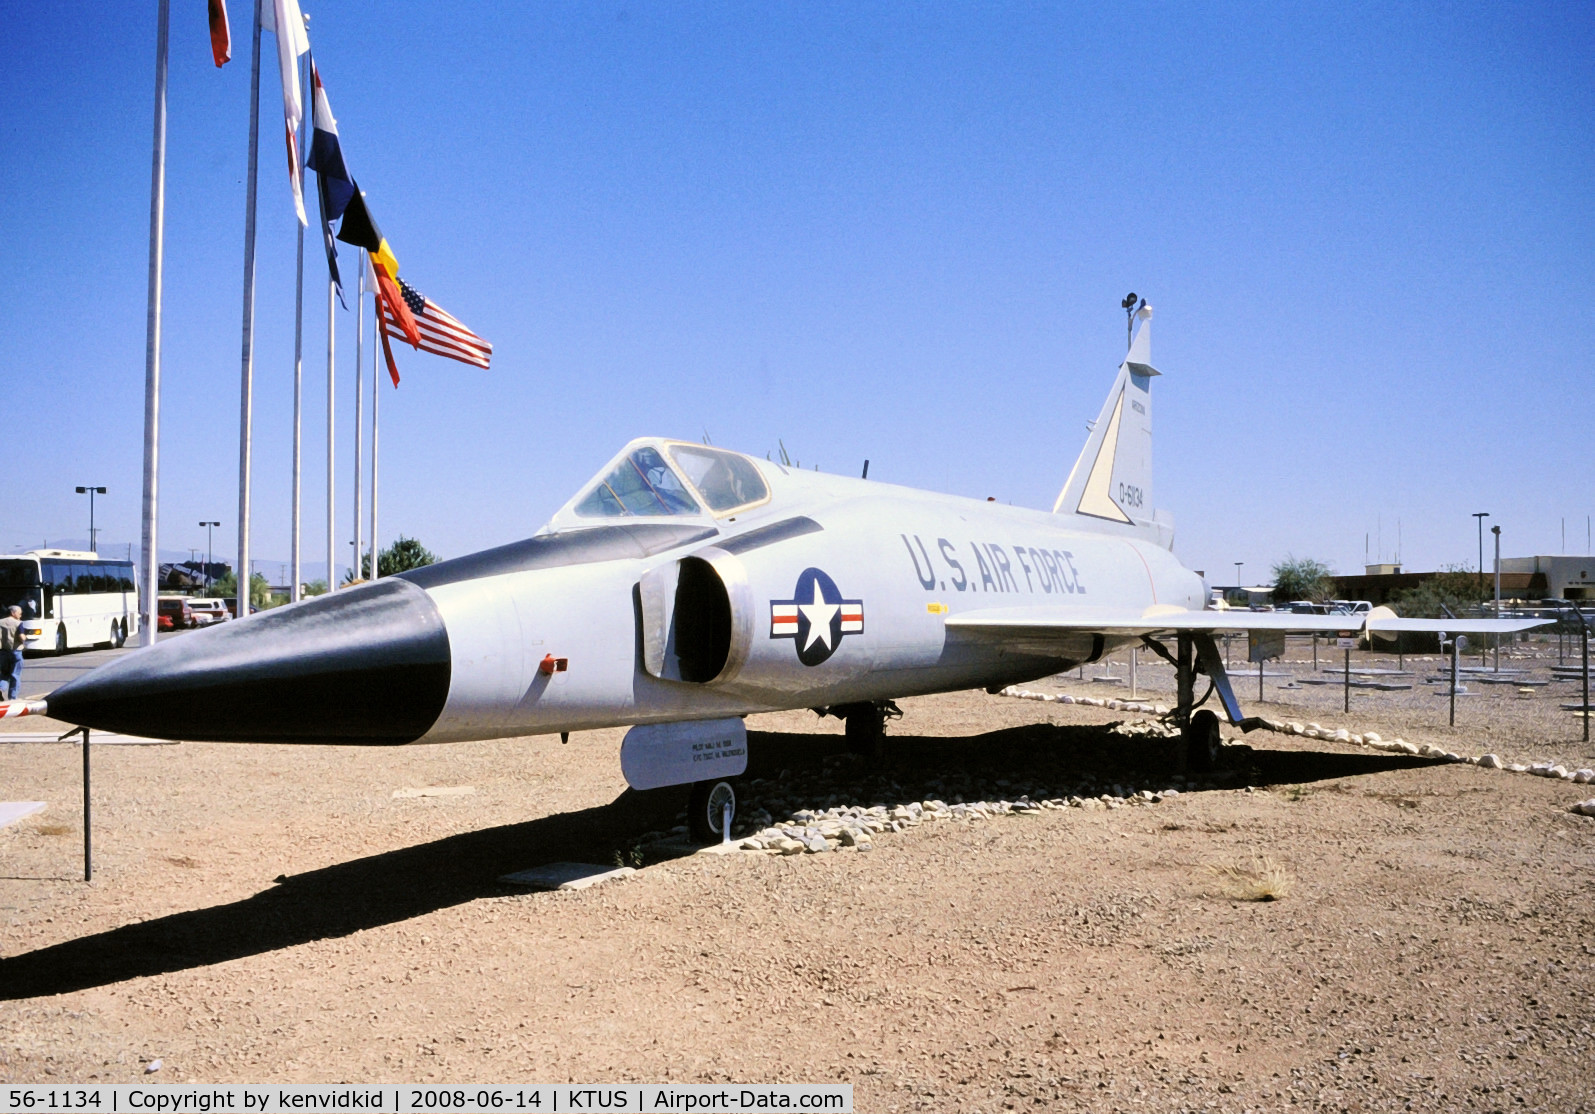 56-1134, Convair F-102A C/N 8-10-351, At Tucson ANG base memorial park, circa 1993.